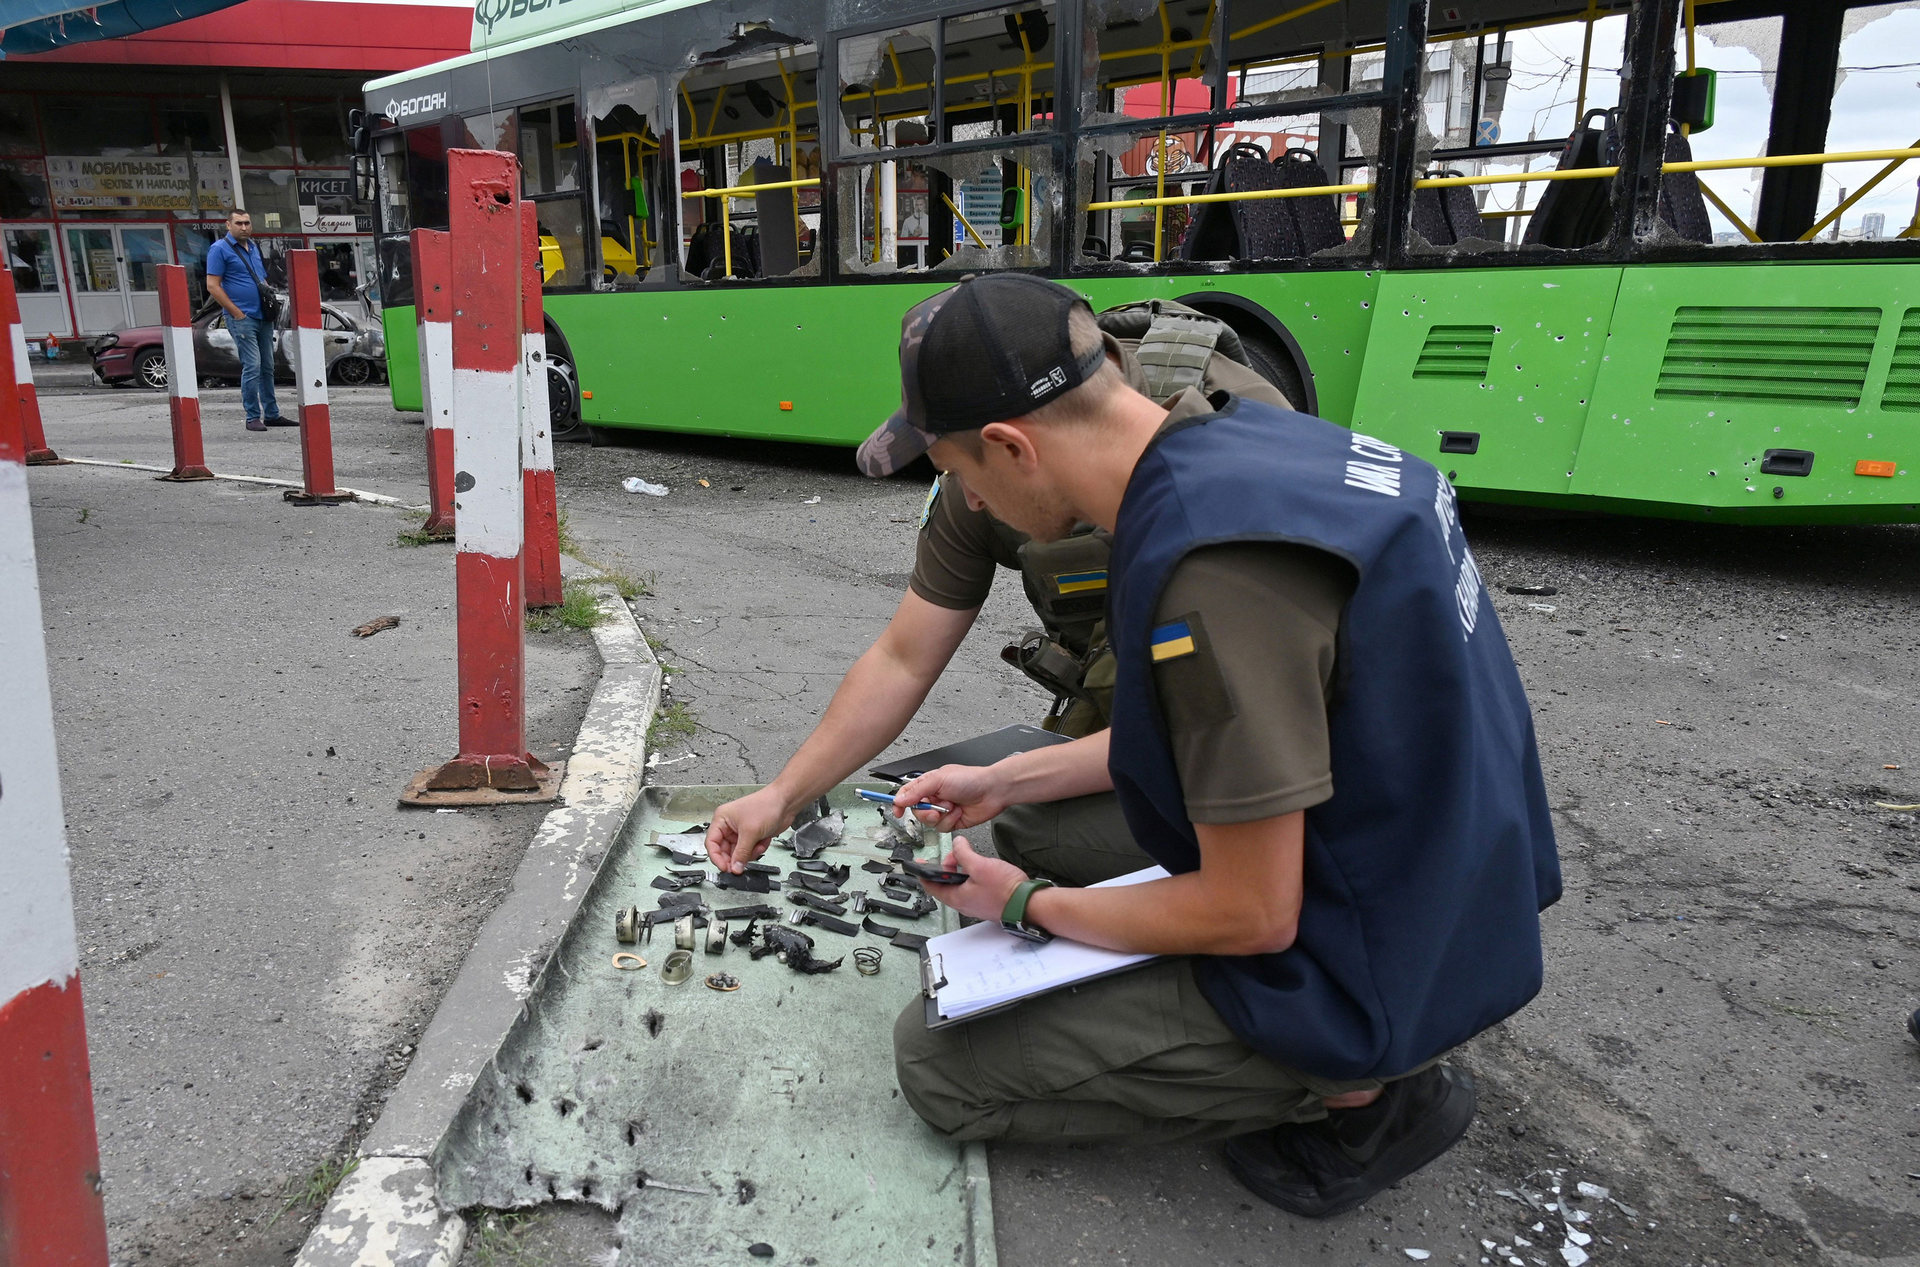 Ukrainian authorities collect fragments after a Russian rocket strike in Kharkiv